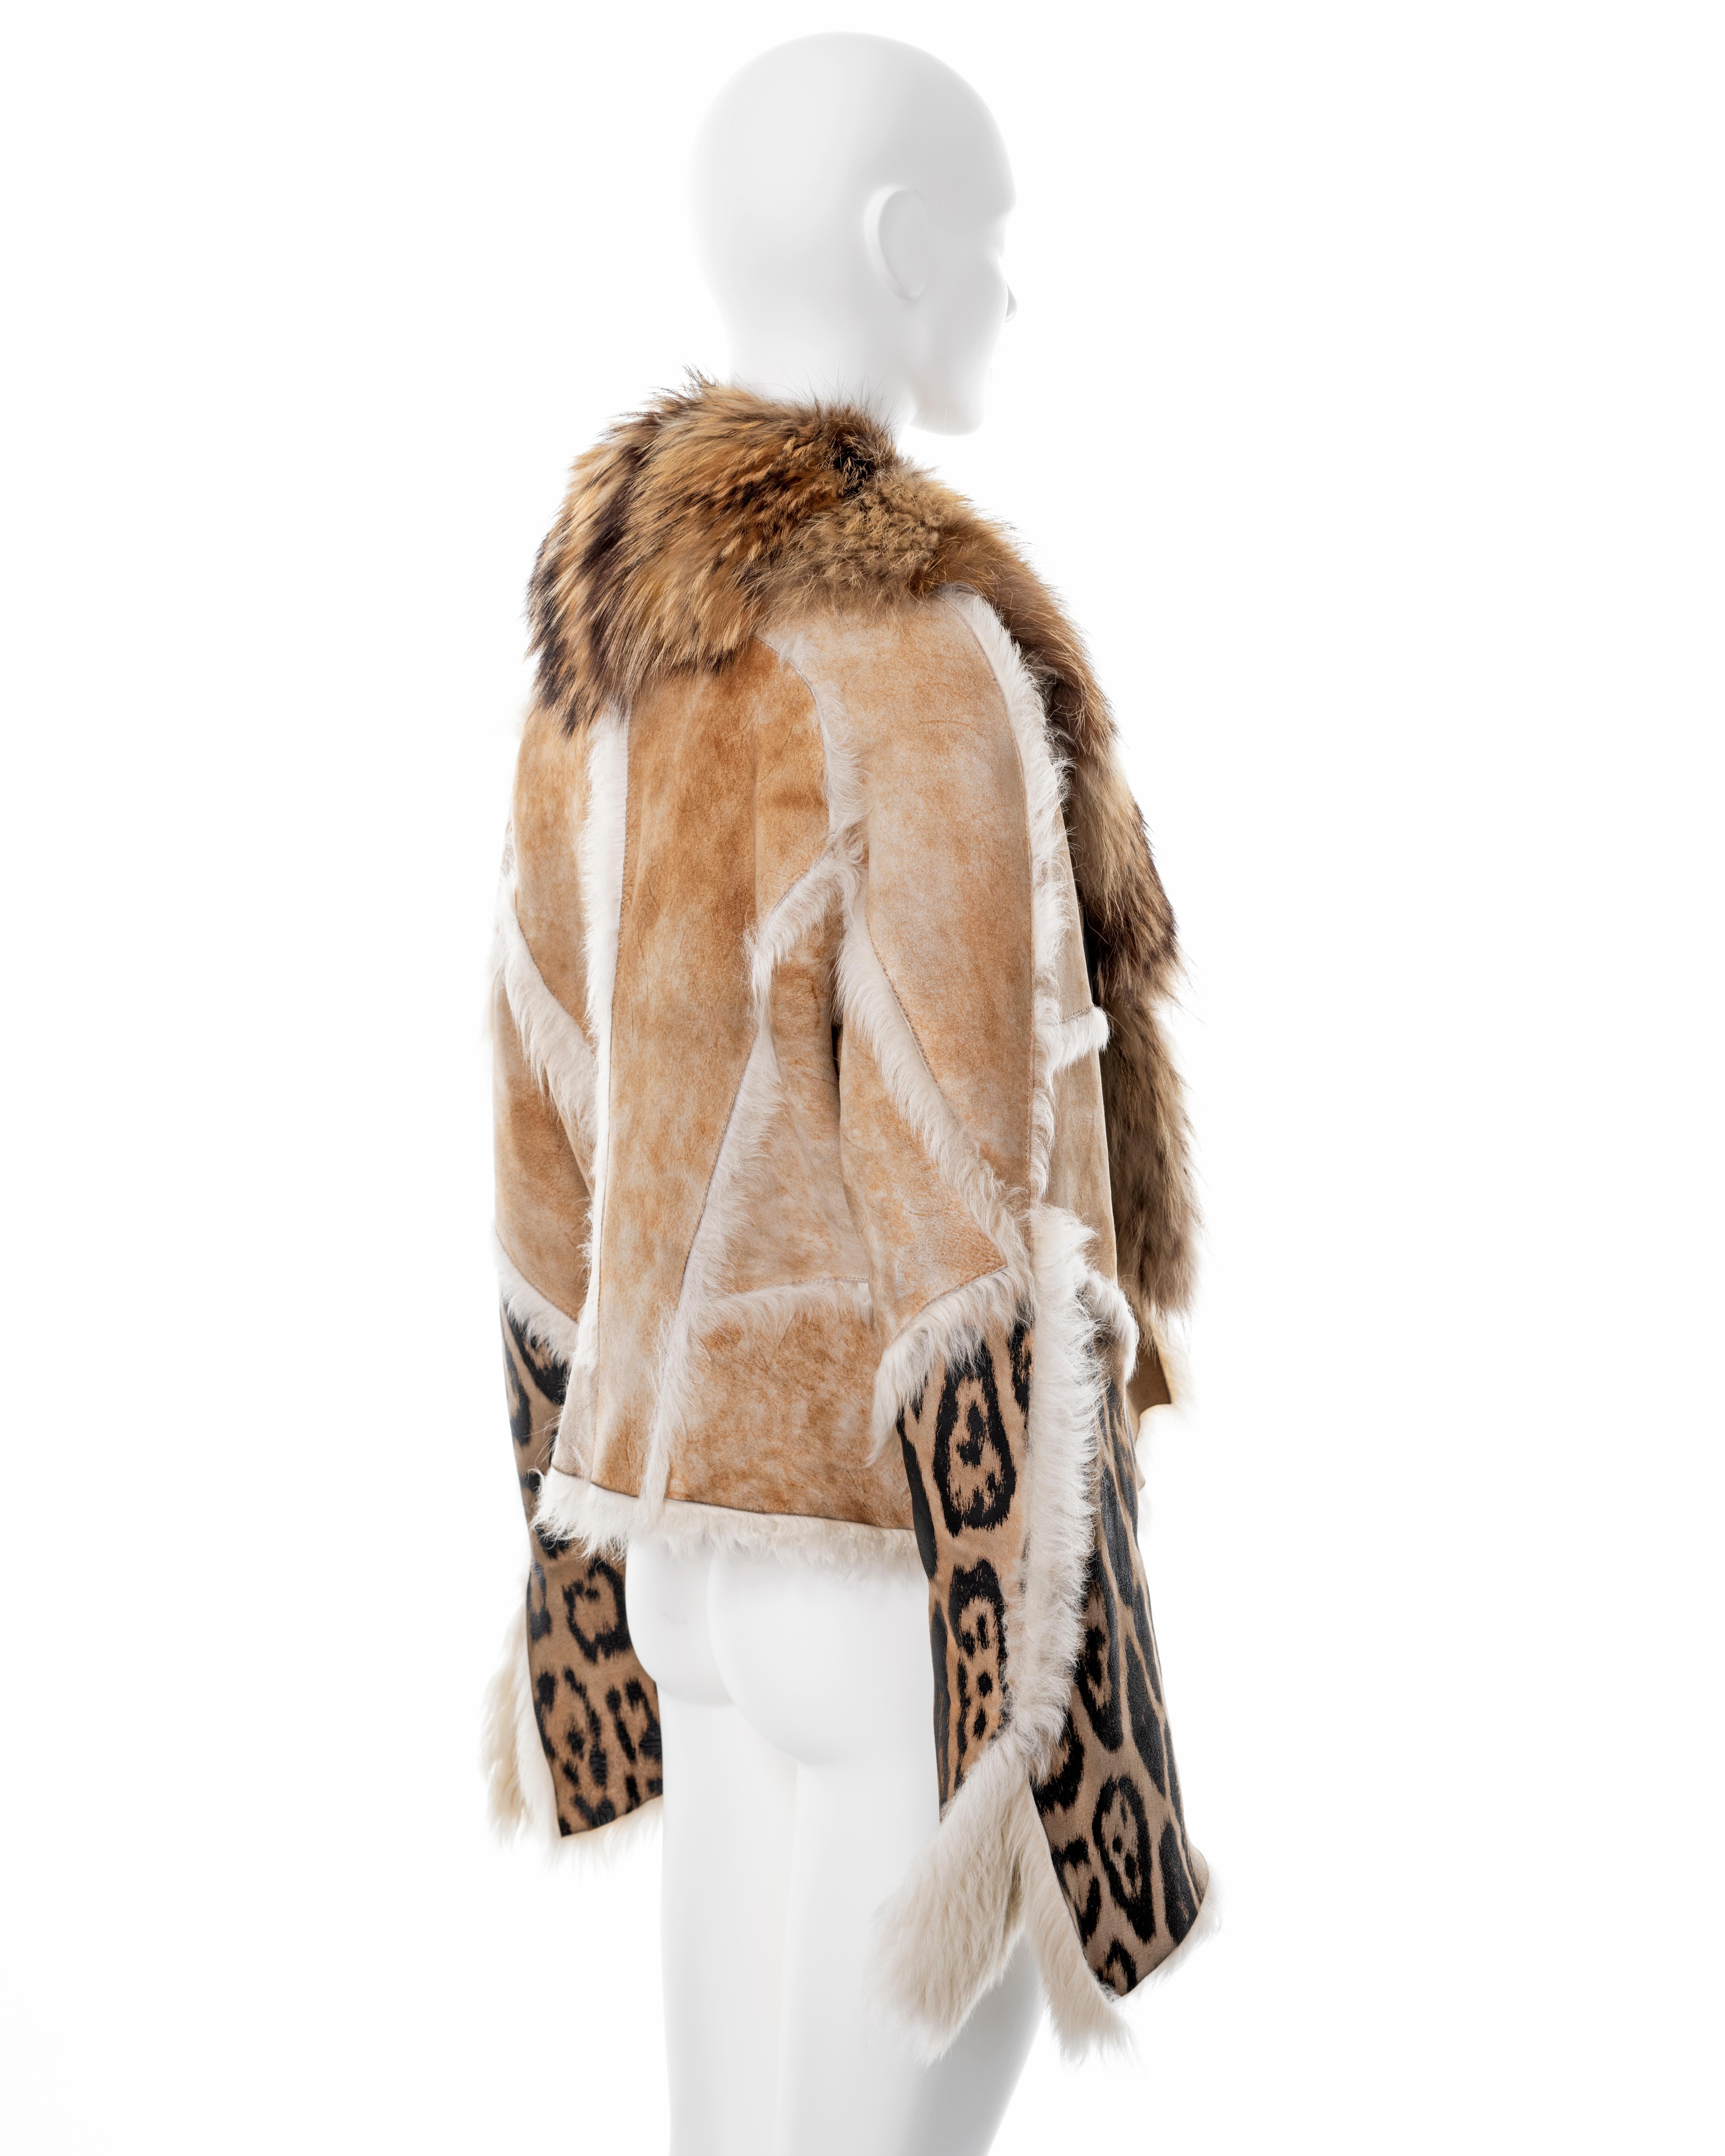 Roberto Cavalli leopard print sheepskin jacket with fox fur collar, fw 2001 3